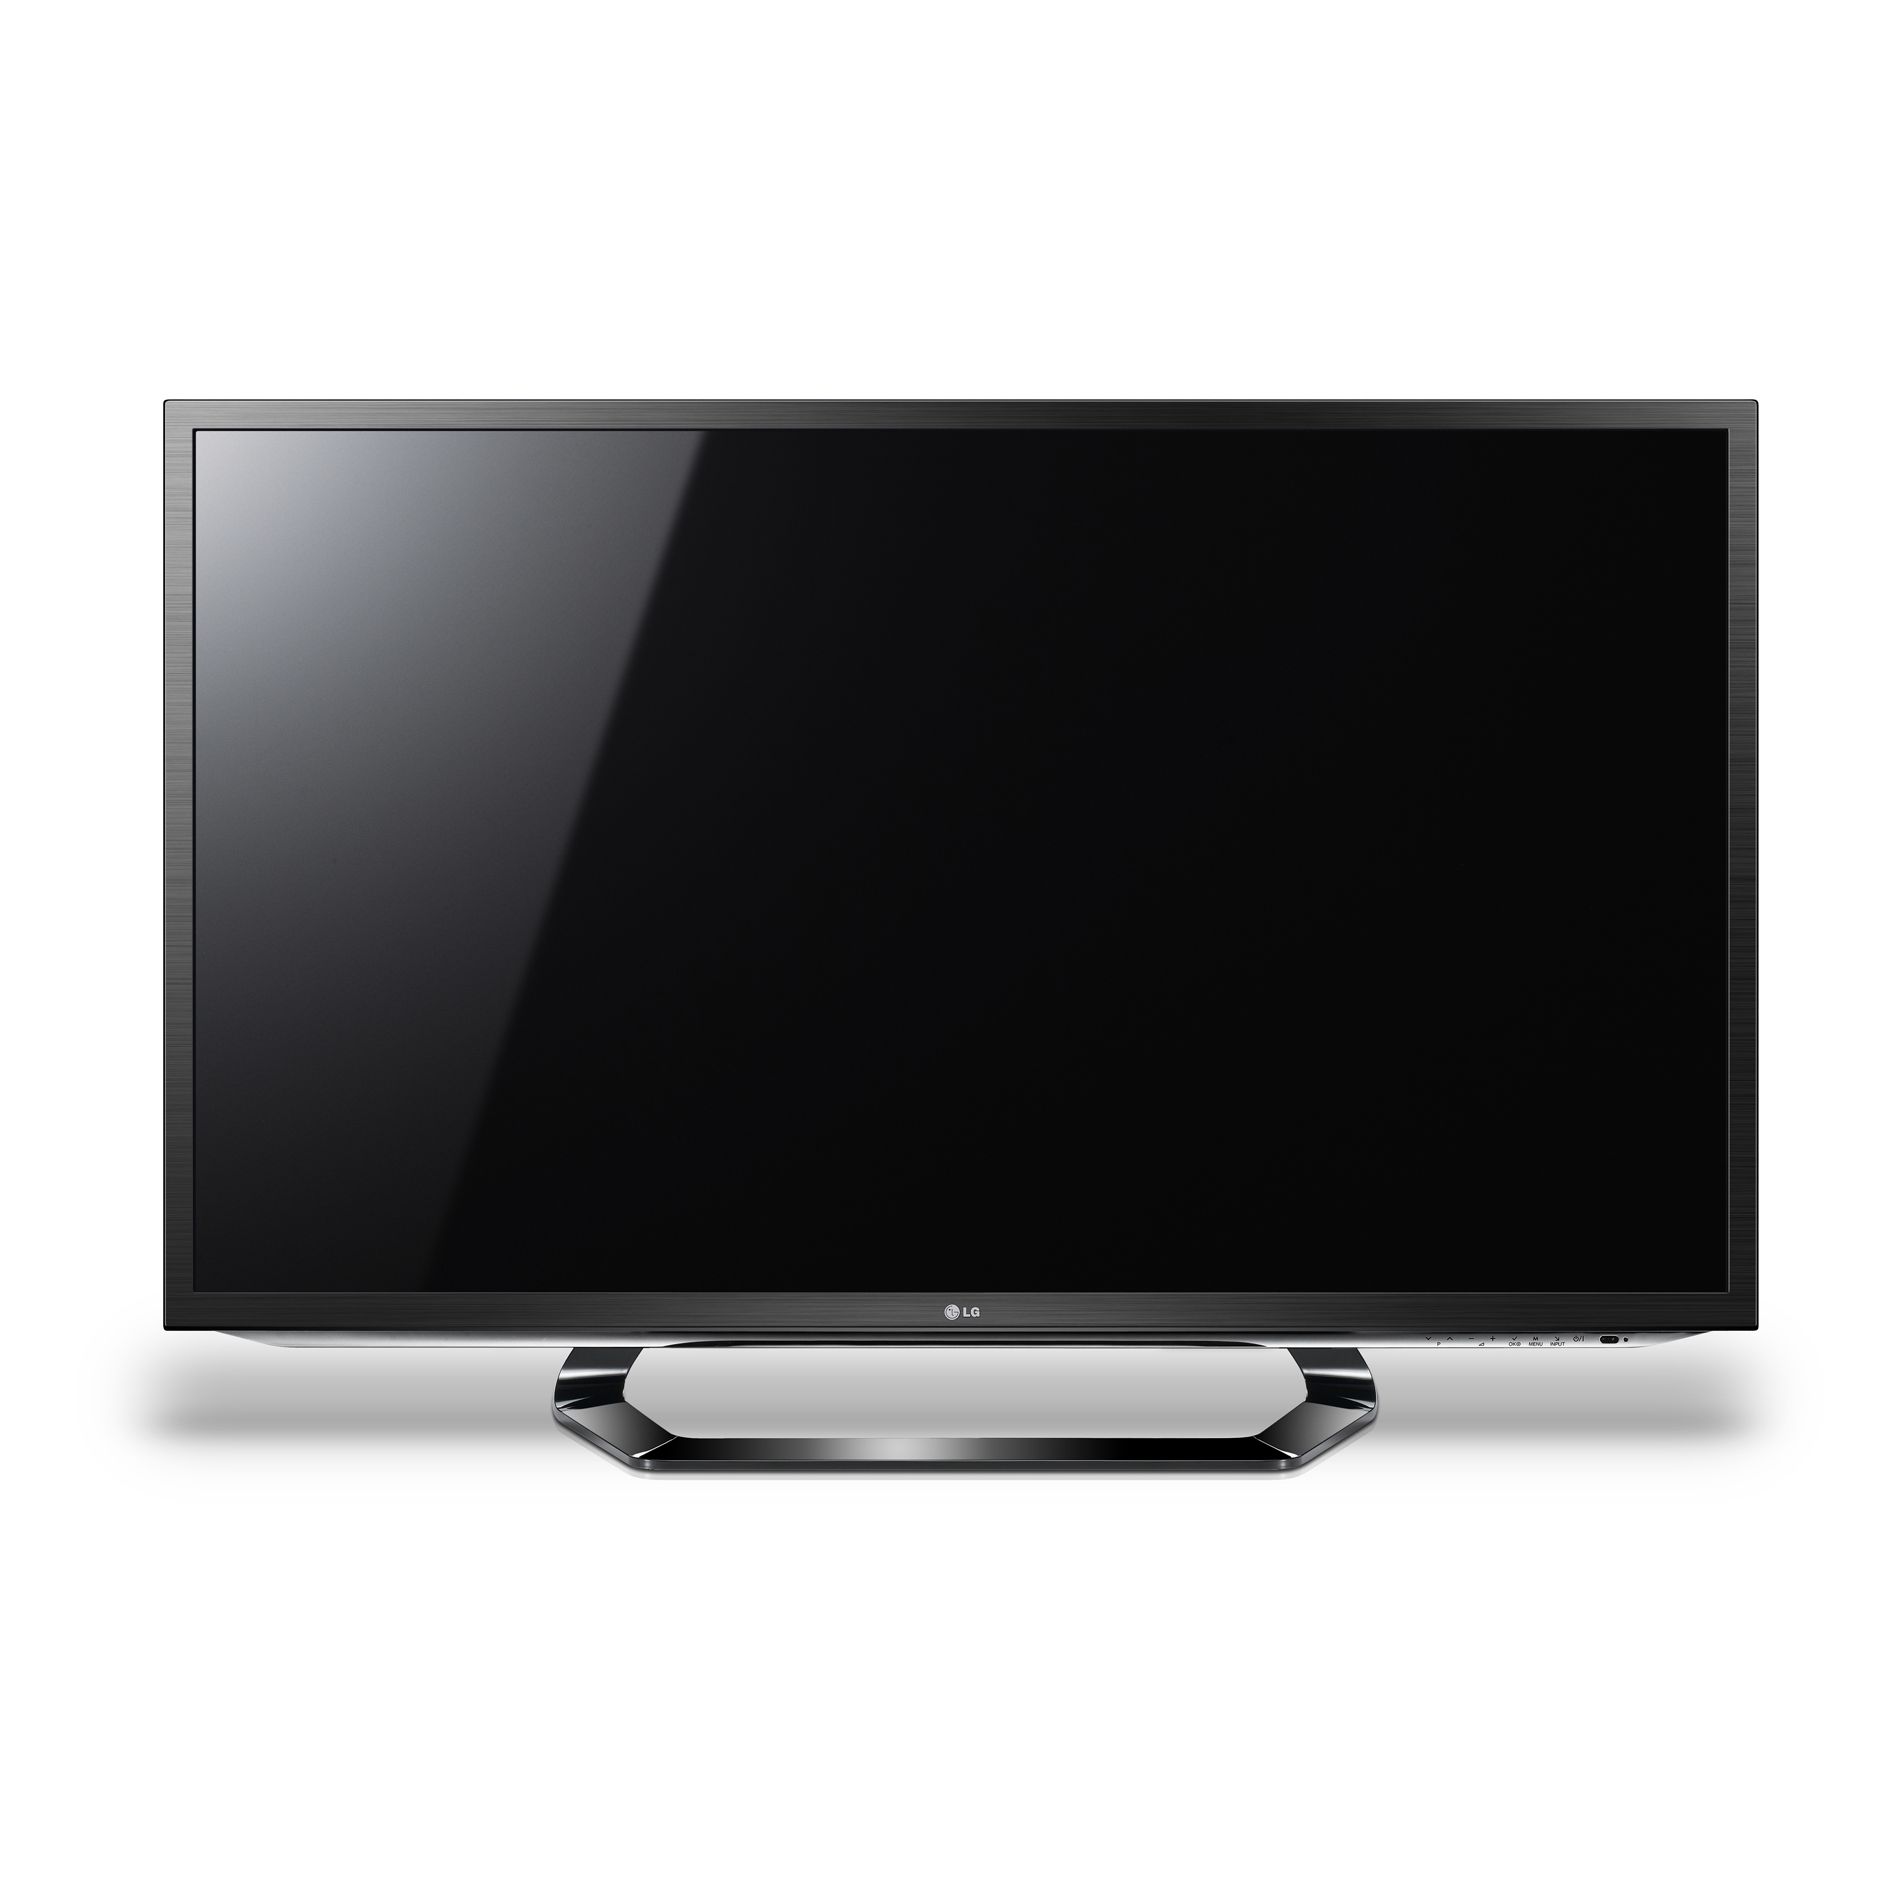 LG 47" LED Cinema 3D Smart TV 47LM6200